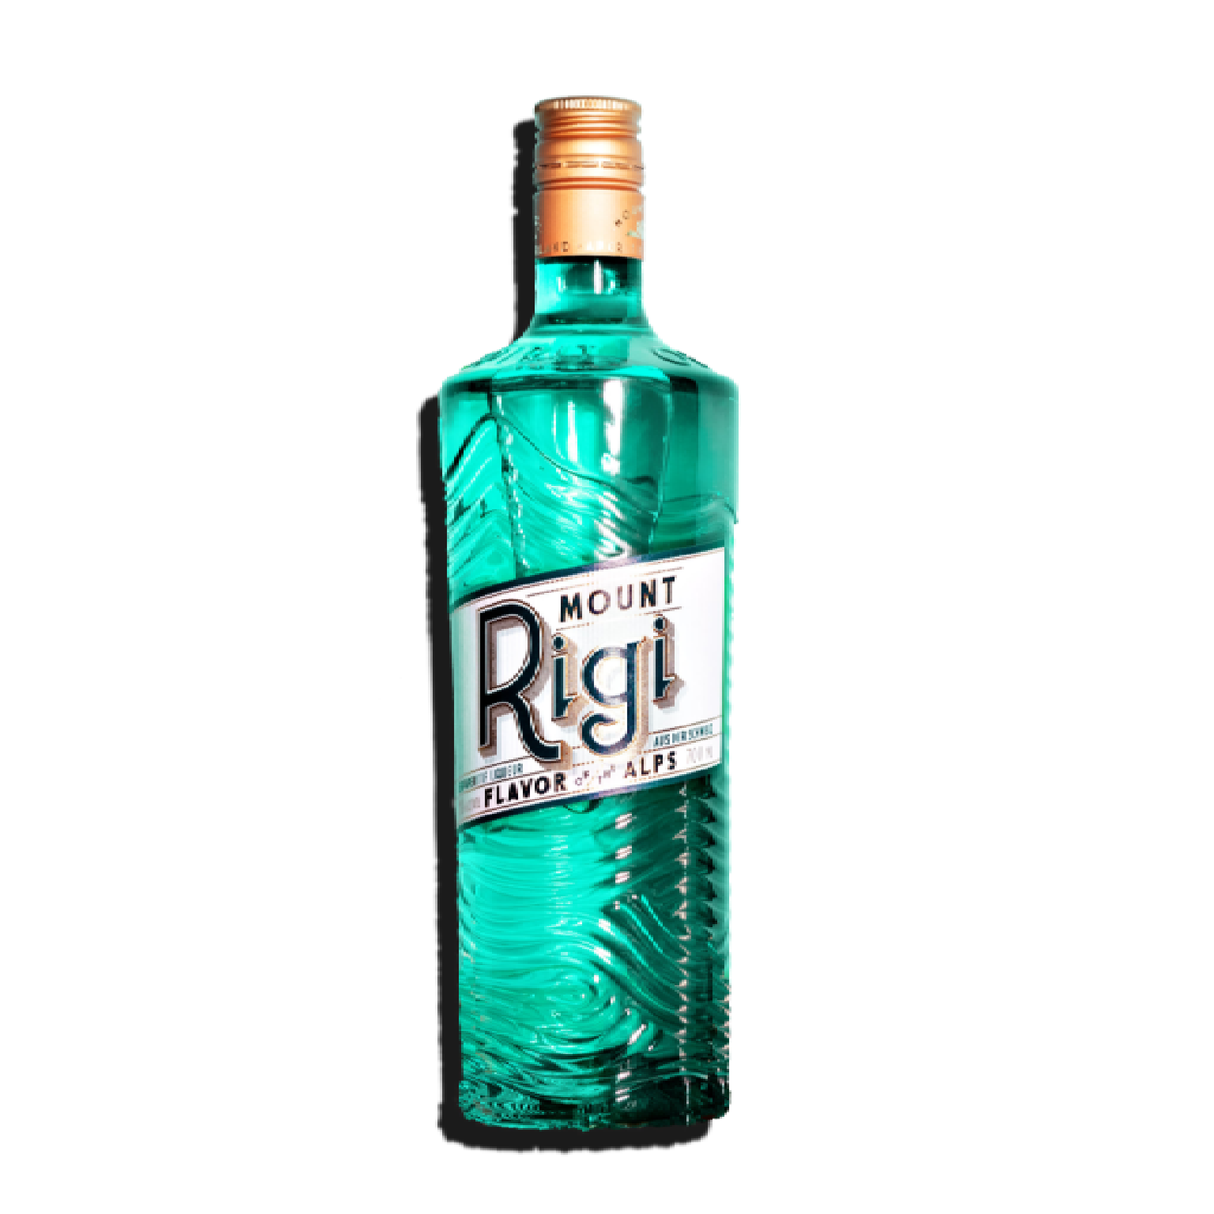 Mount Rigi Flavor Of The Alps Liqueur - Liquor Geeks